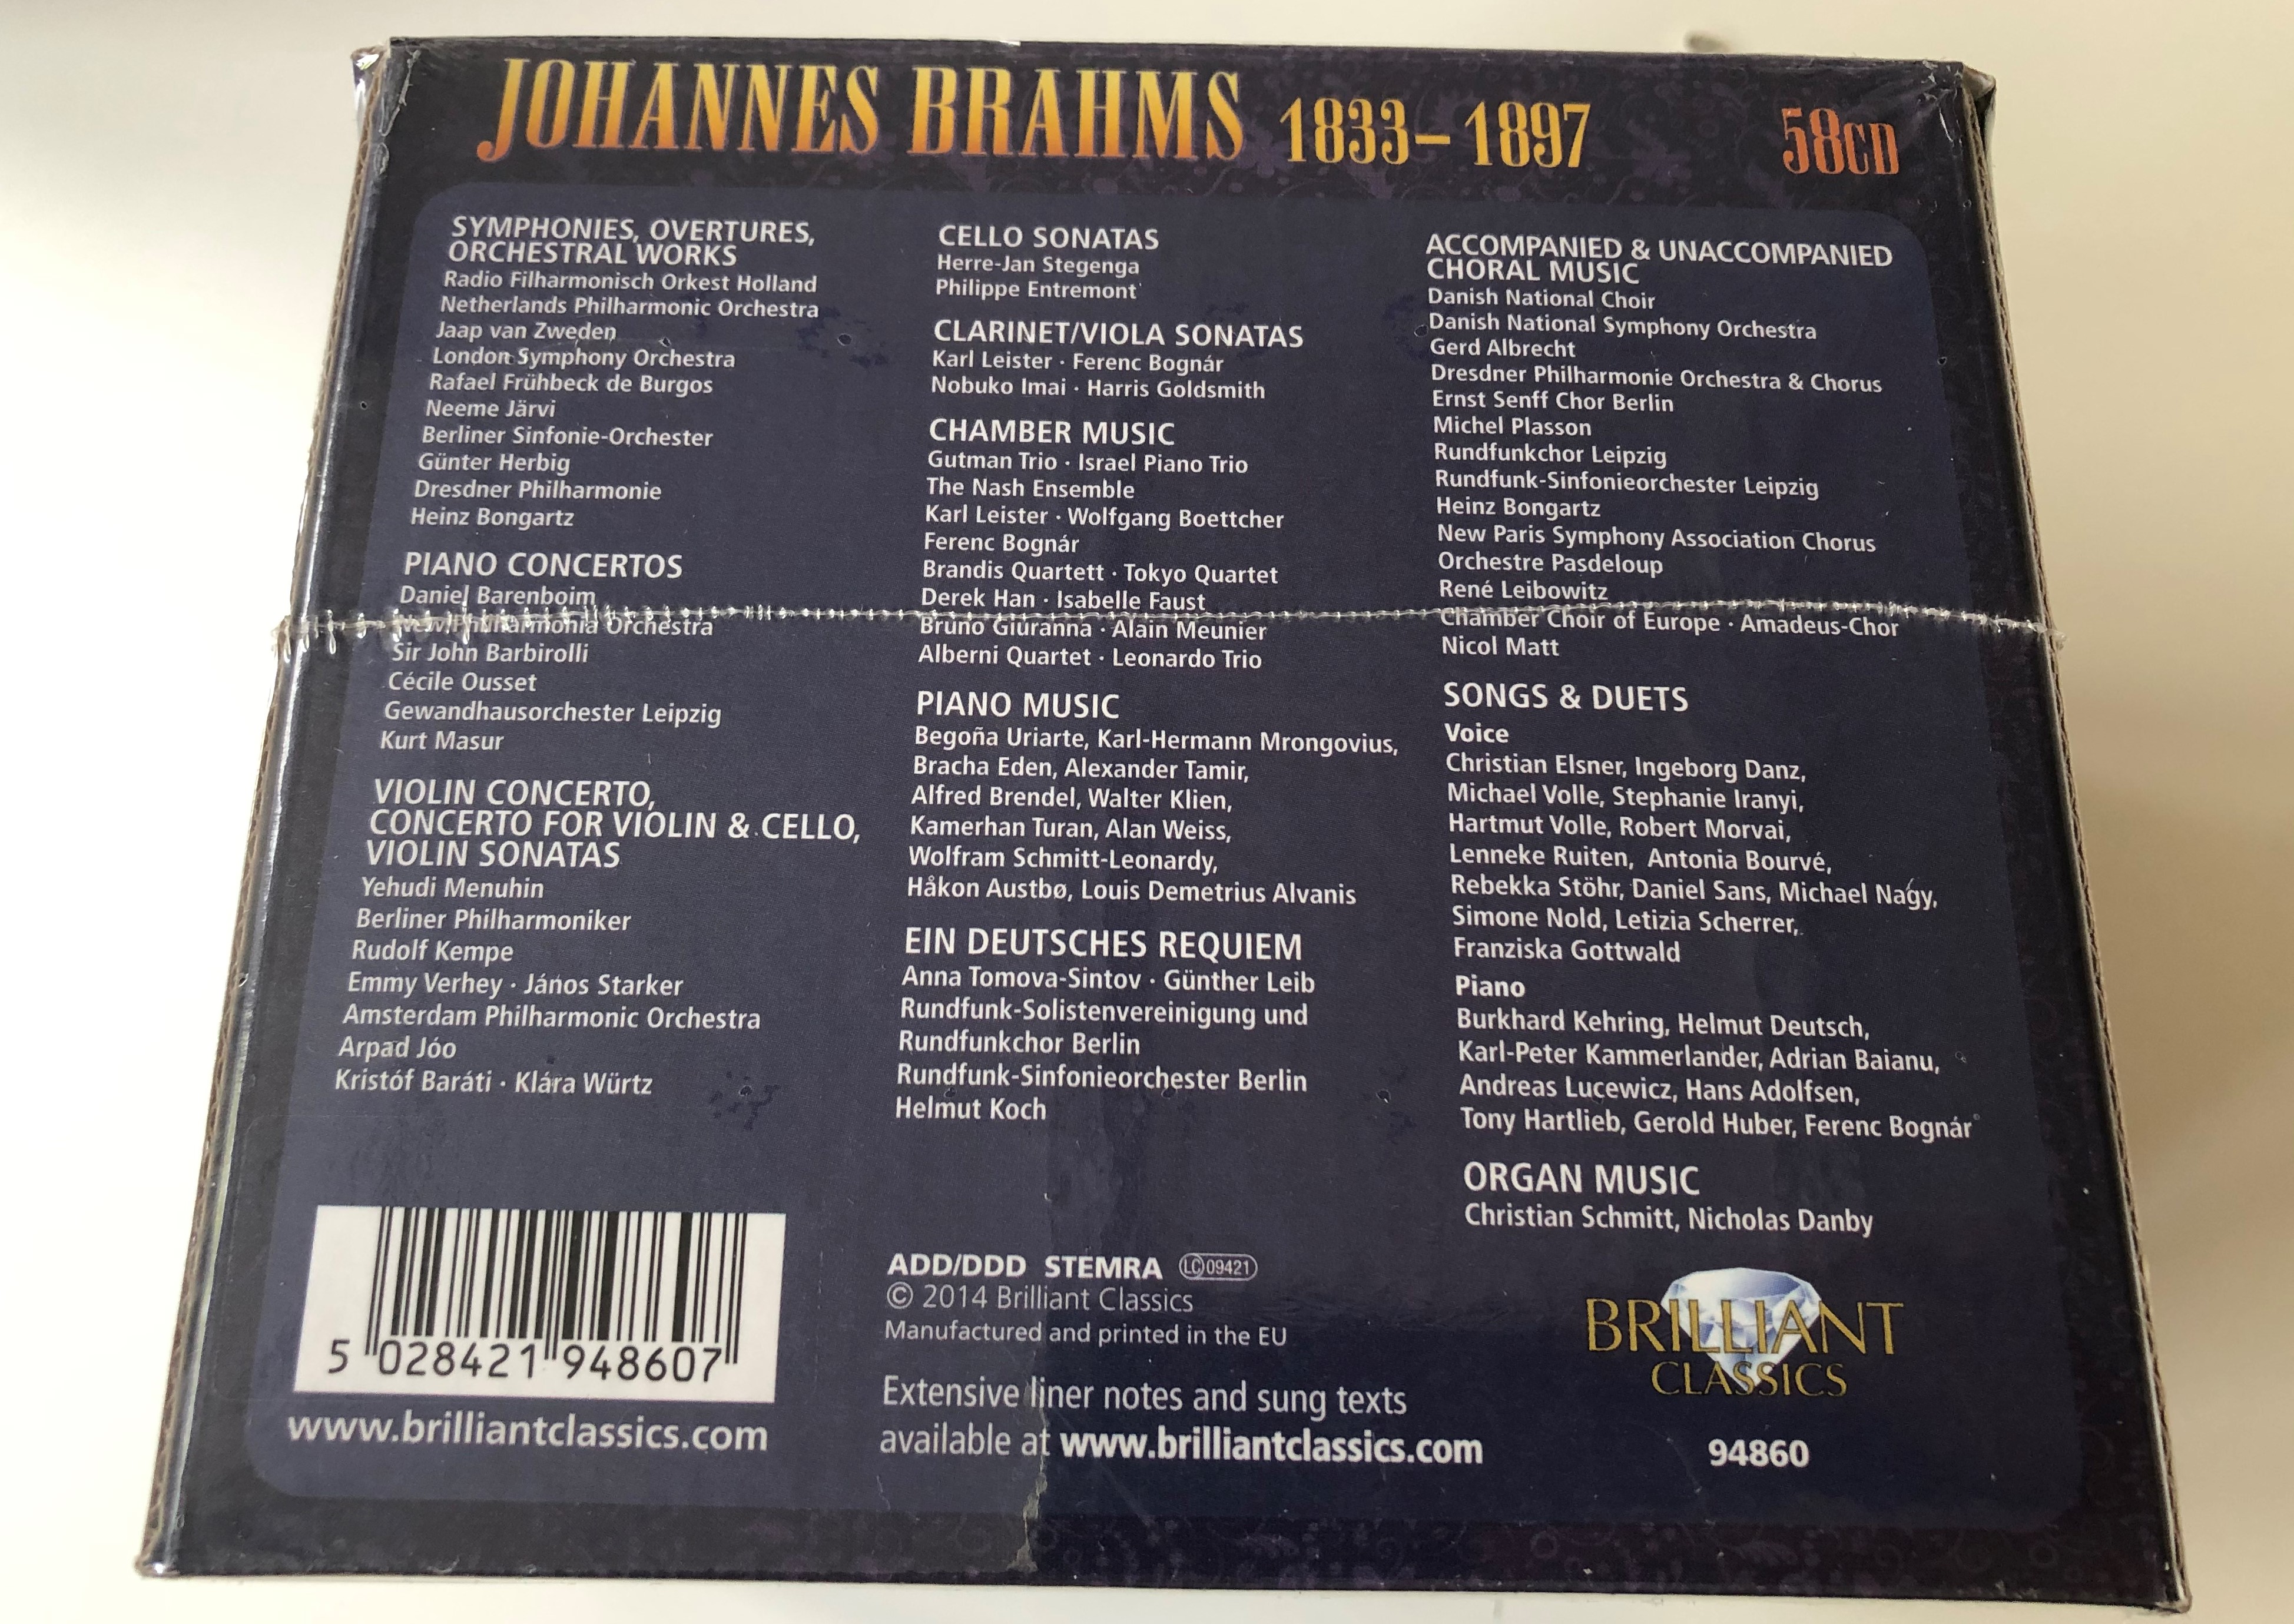 brahms-complete-edition-complete-works-on-cd-features-award-winning-recordings-and-acclaimed-performersensembles-including-jaap-van-zweden-yehudi-menuhin-daniel-barenboim...-brilliant-class-4-.jpg